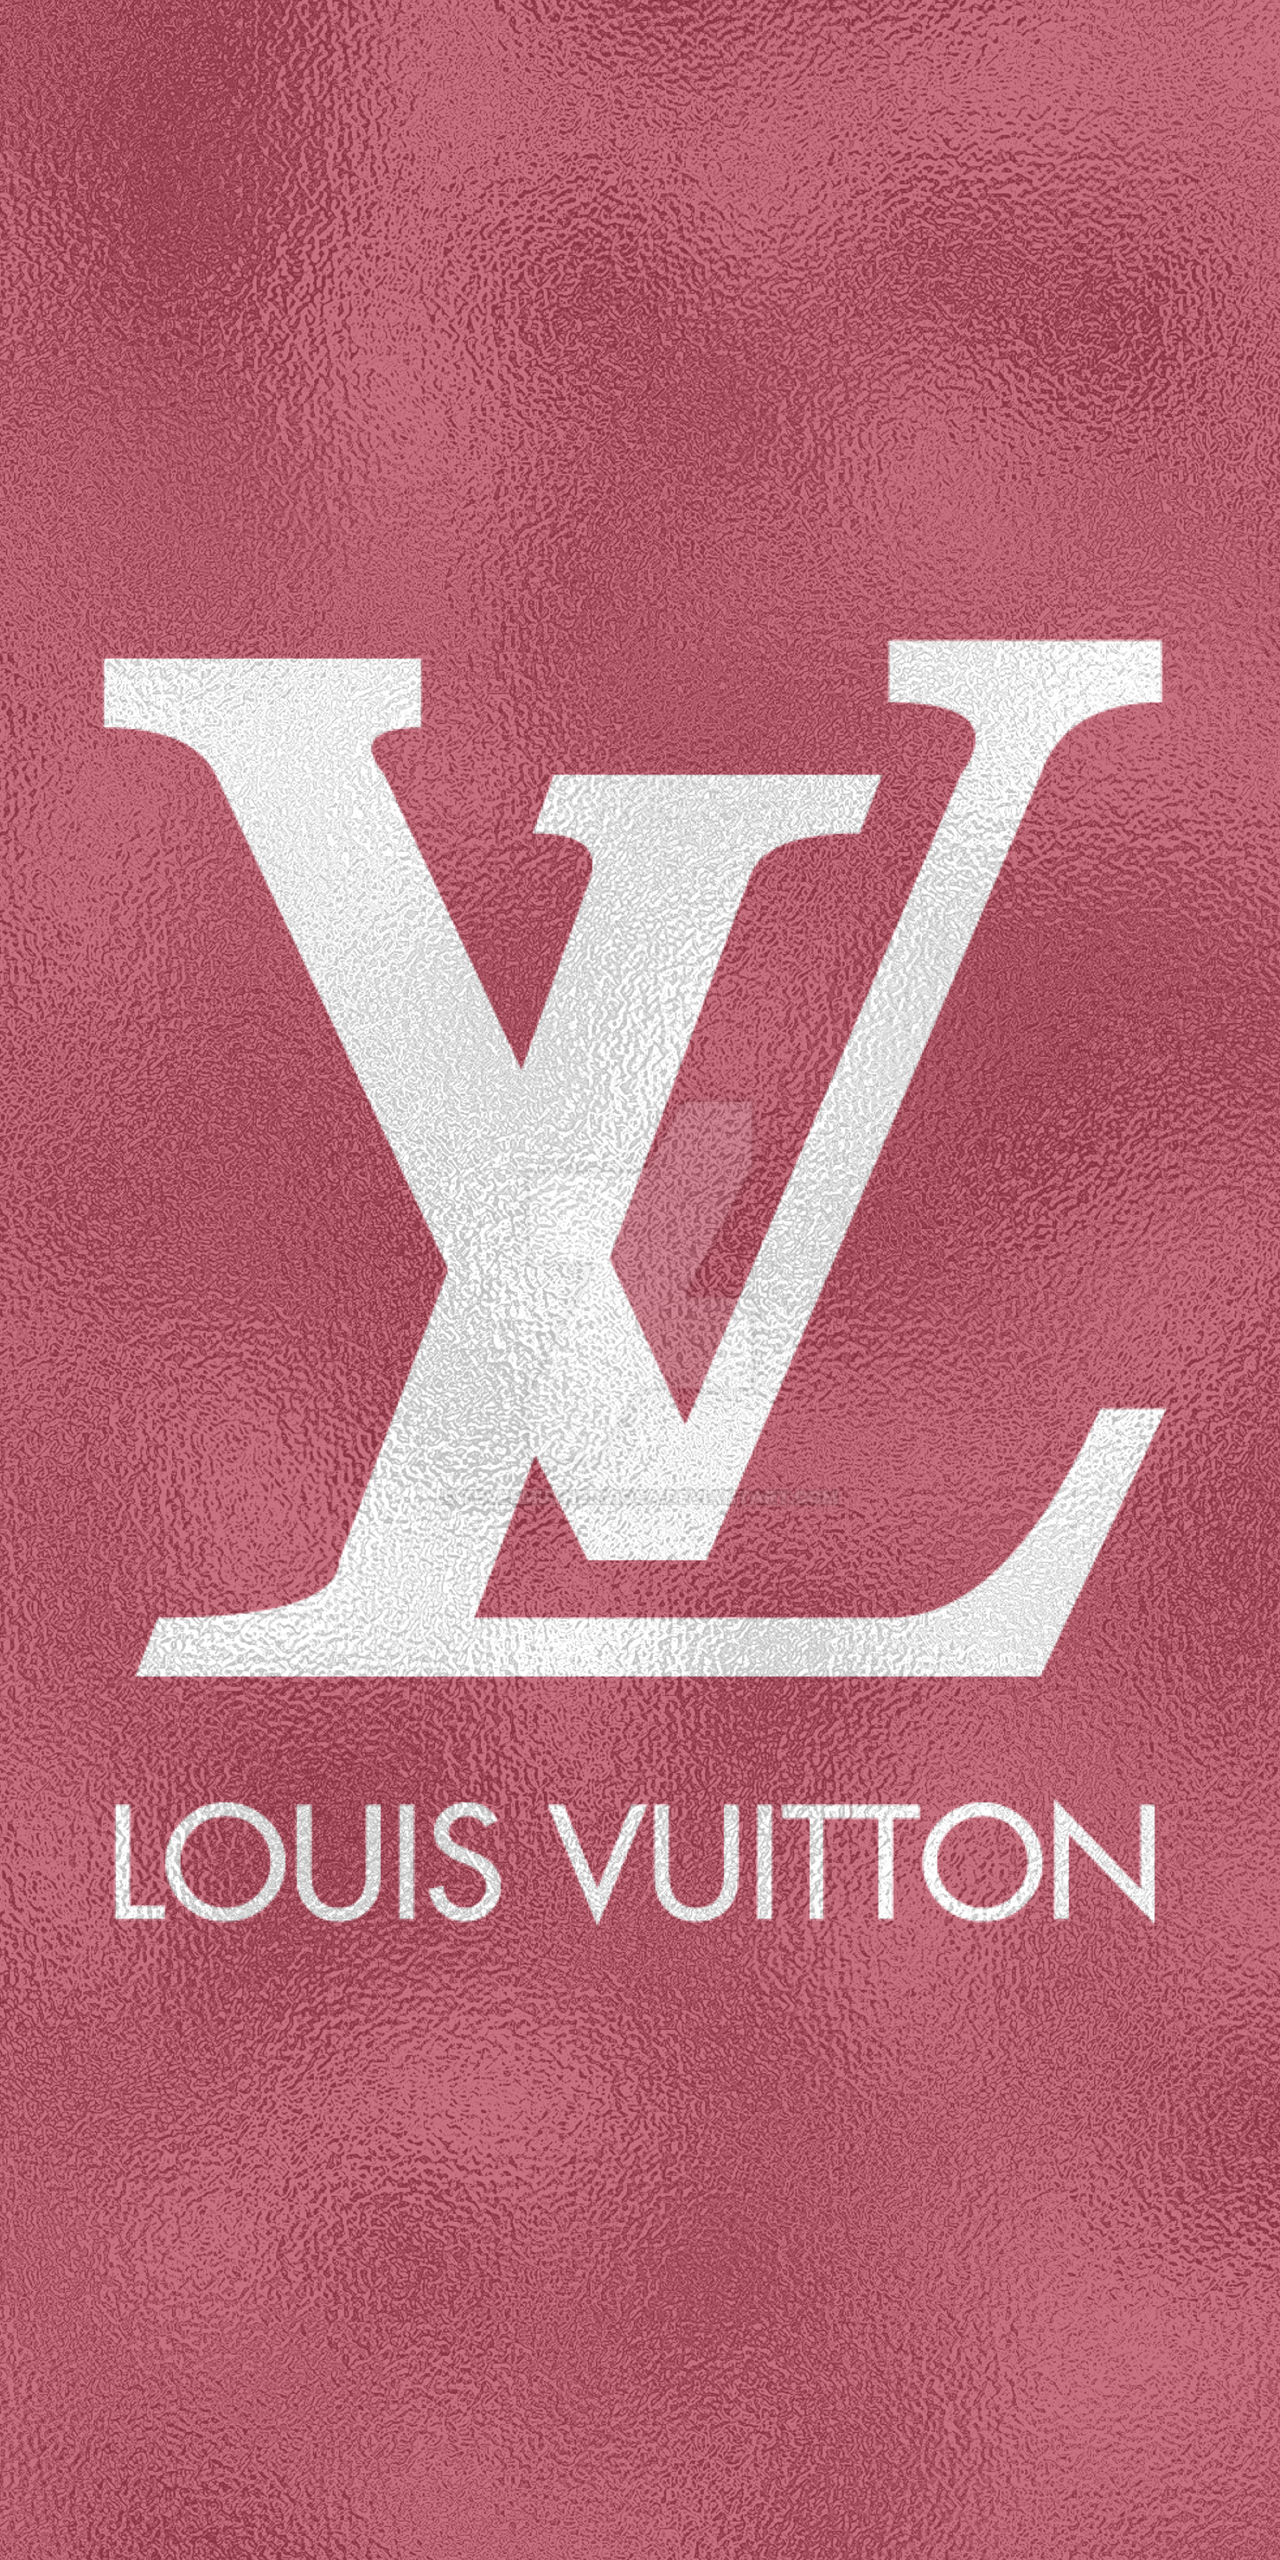 Louis Vuitton Rainbow Monogram by TeVesMuyNerviosa on DeviantArt